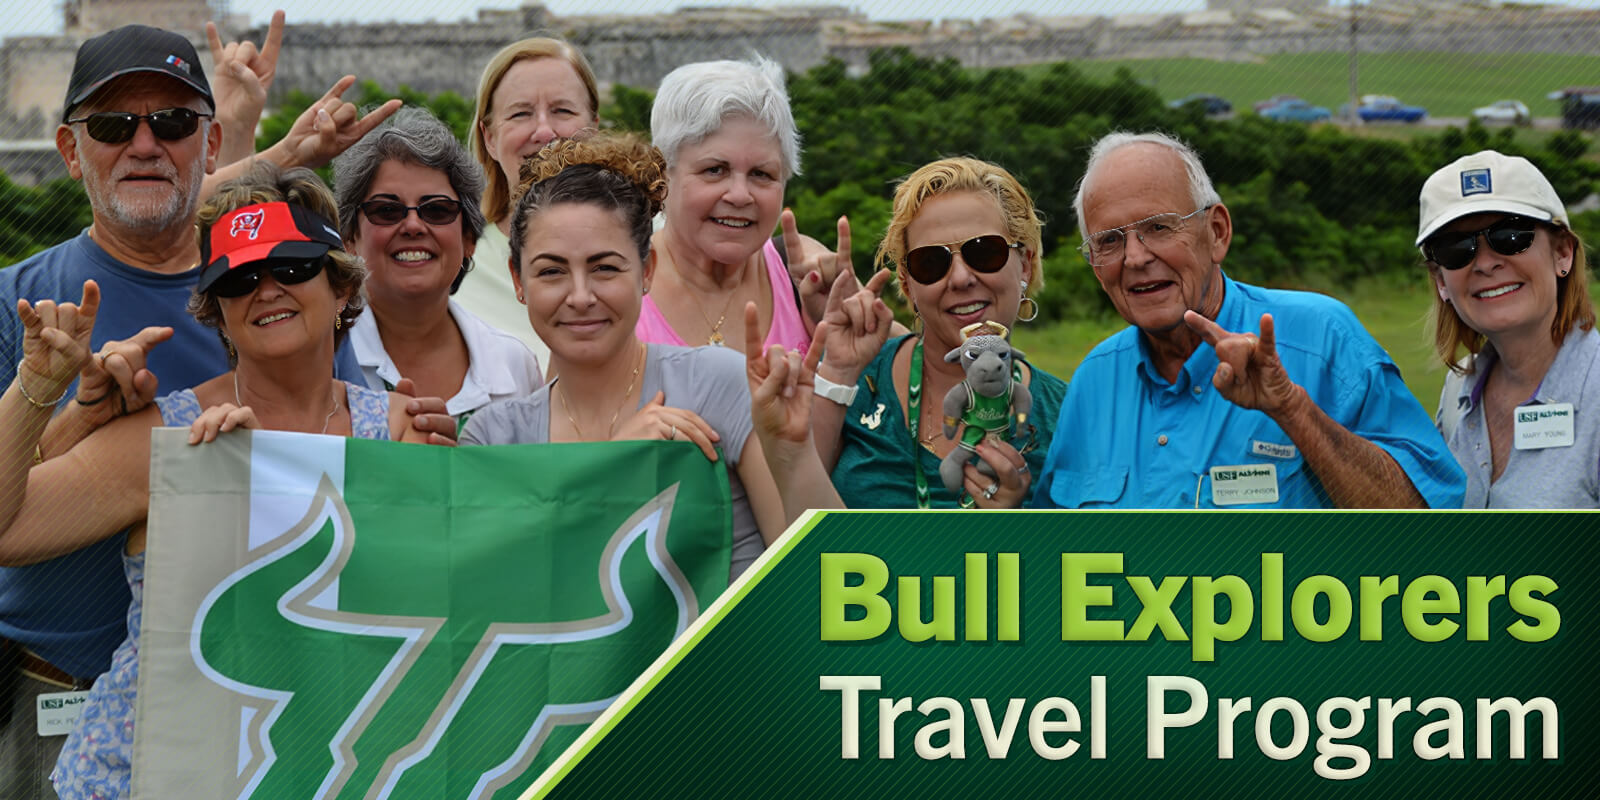 Bull Explorers Travel Program